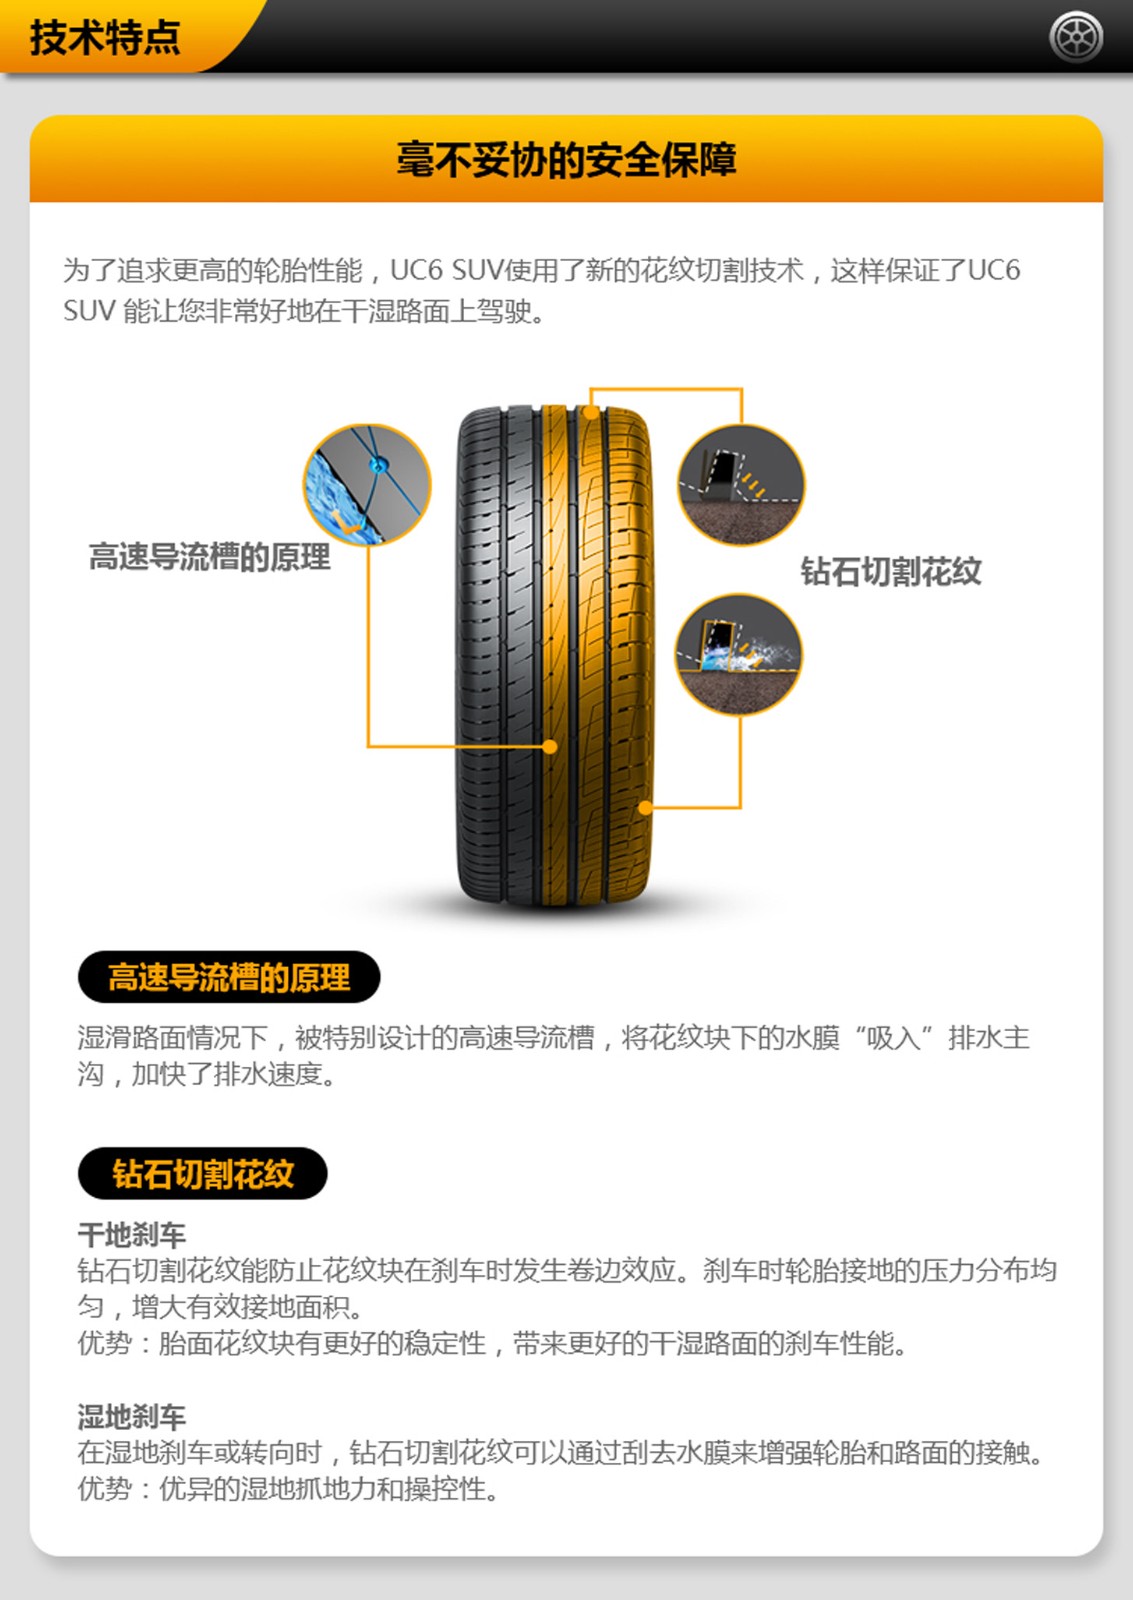 Michelin Malaysia 推出 4 款「Power」摩托轮胎系列 街用与赛用任君选择！ - FooThrottle.com